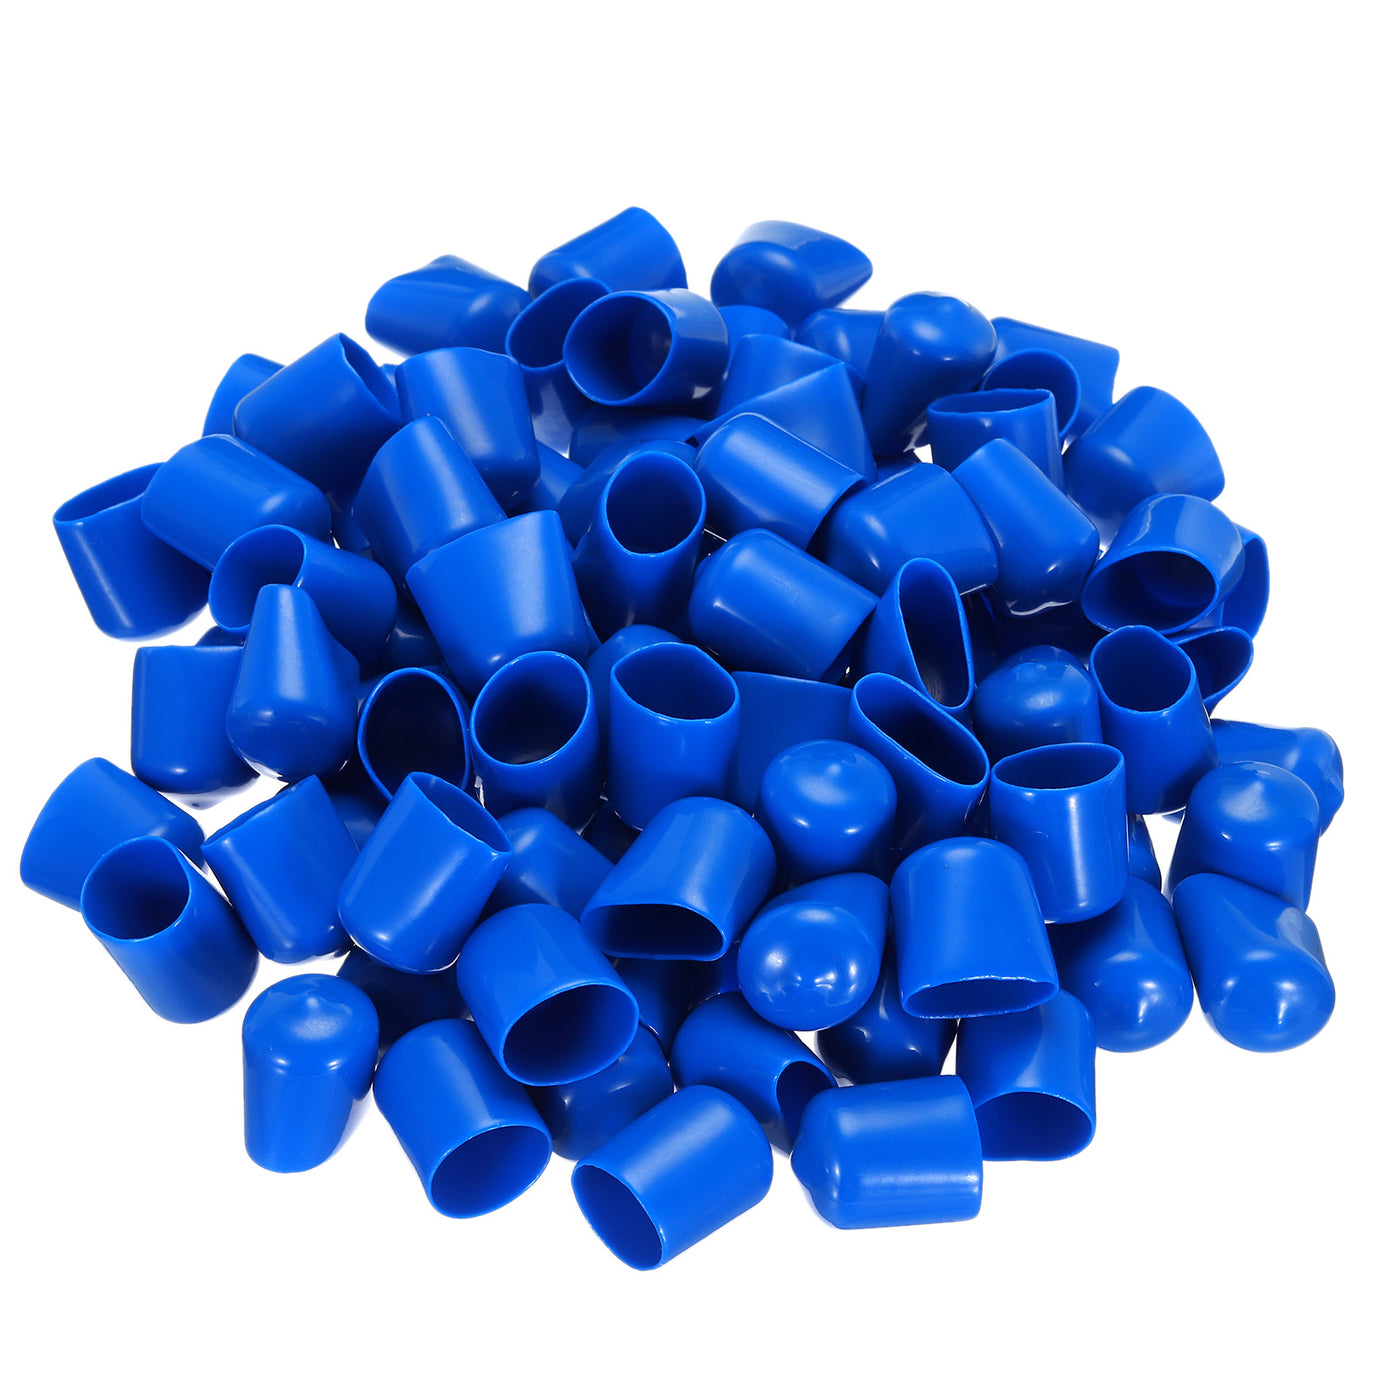 uxcell Uxcell 100pcs Rubber End Caps 17mm ID Vinyl PVC Round Tube Bolt Cap Cover Screw Thread Protectors Blue